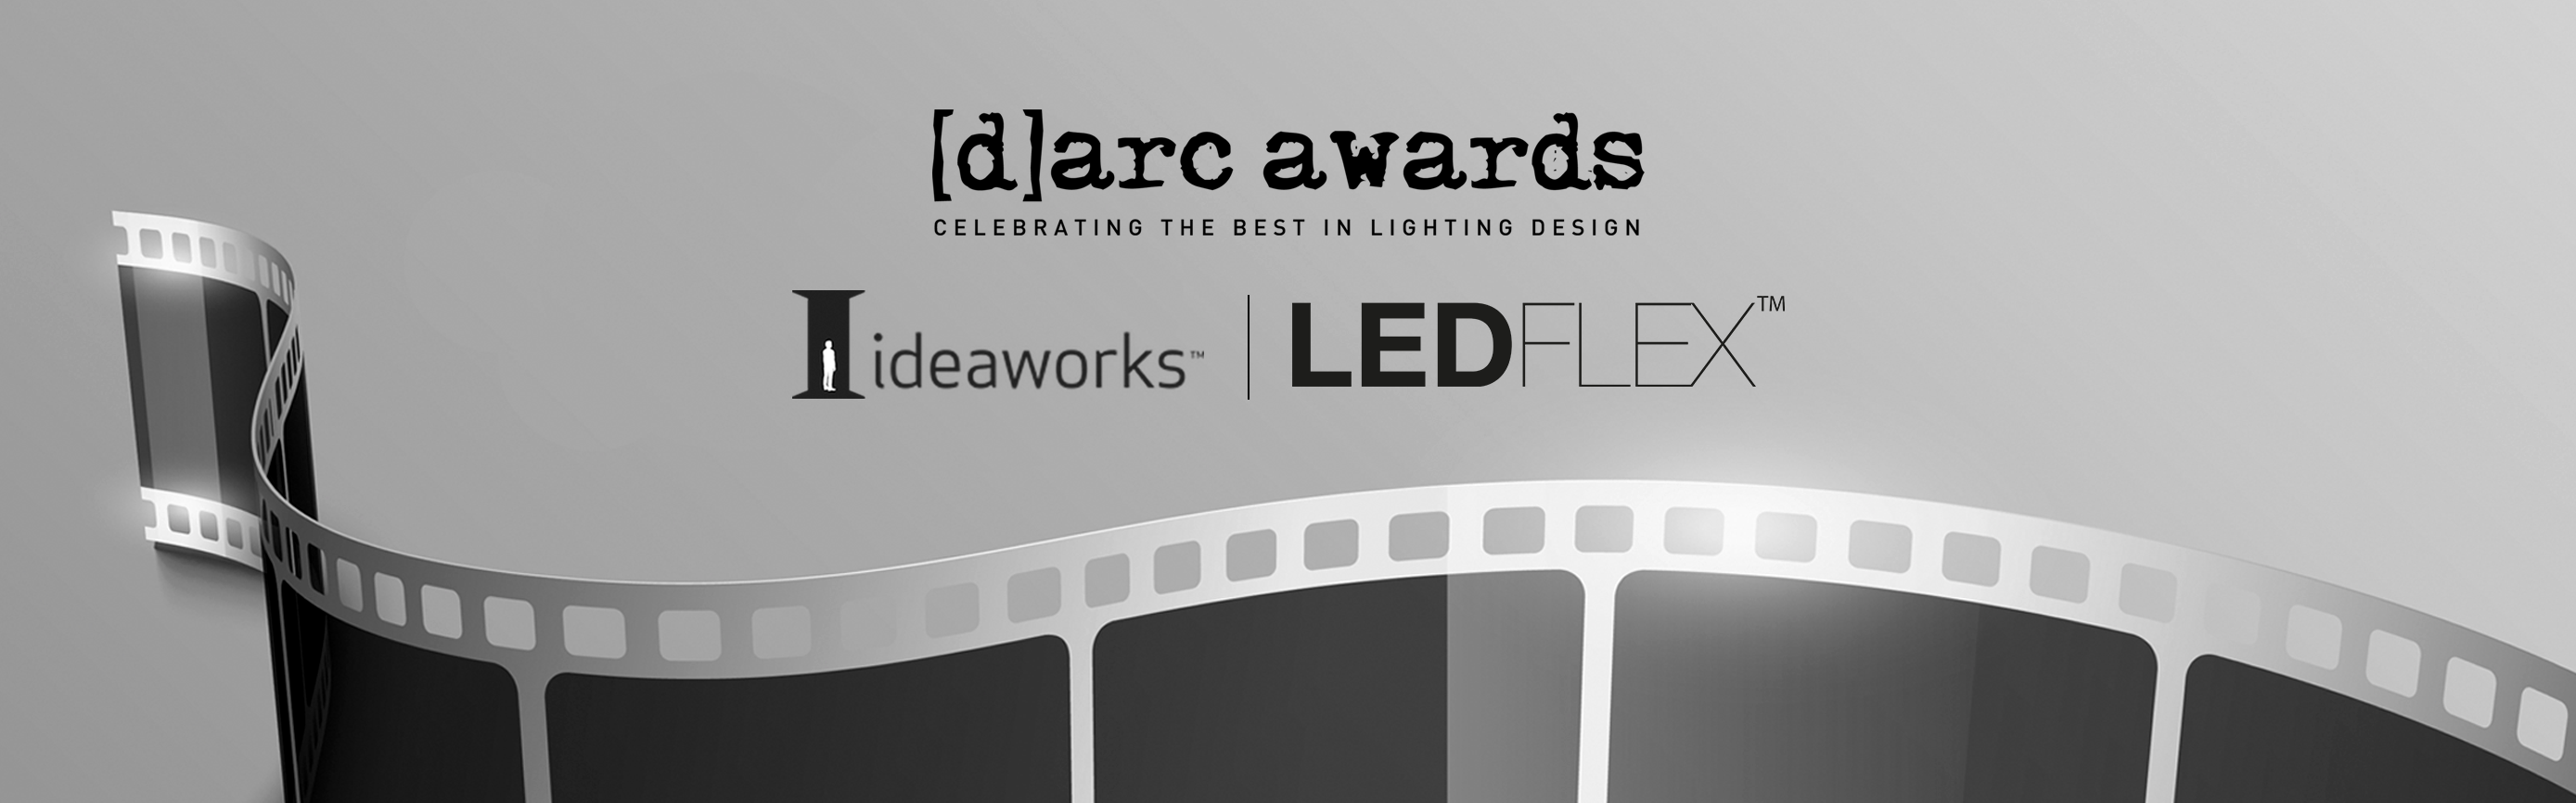 Ideaworks x LEDFlex for Darc Awards 